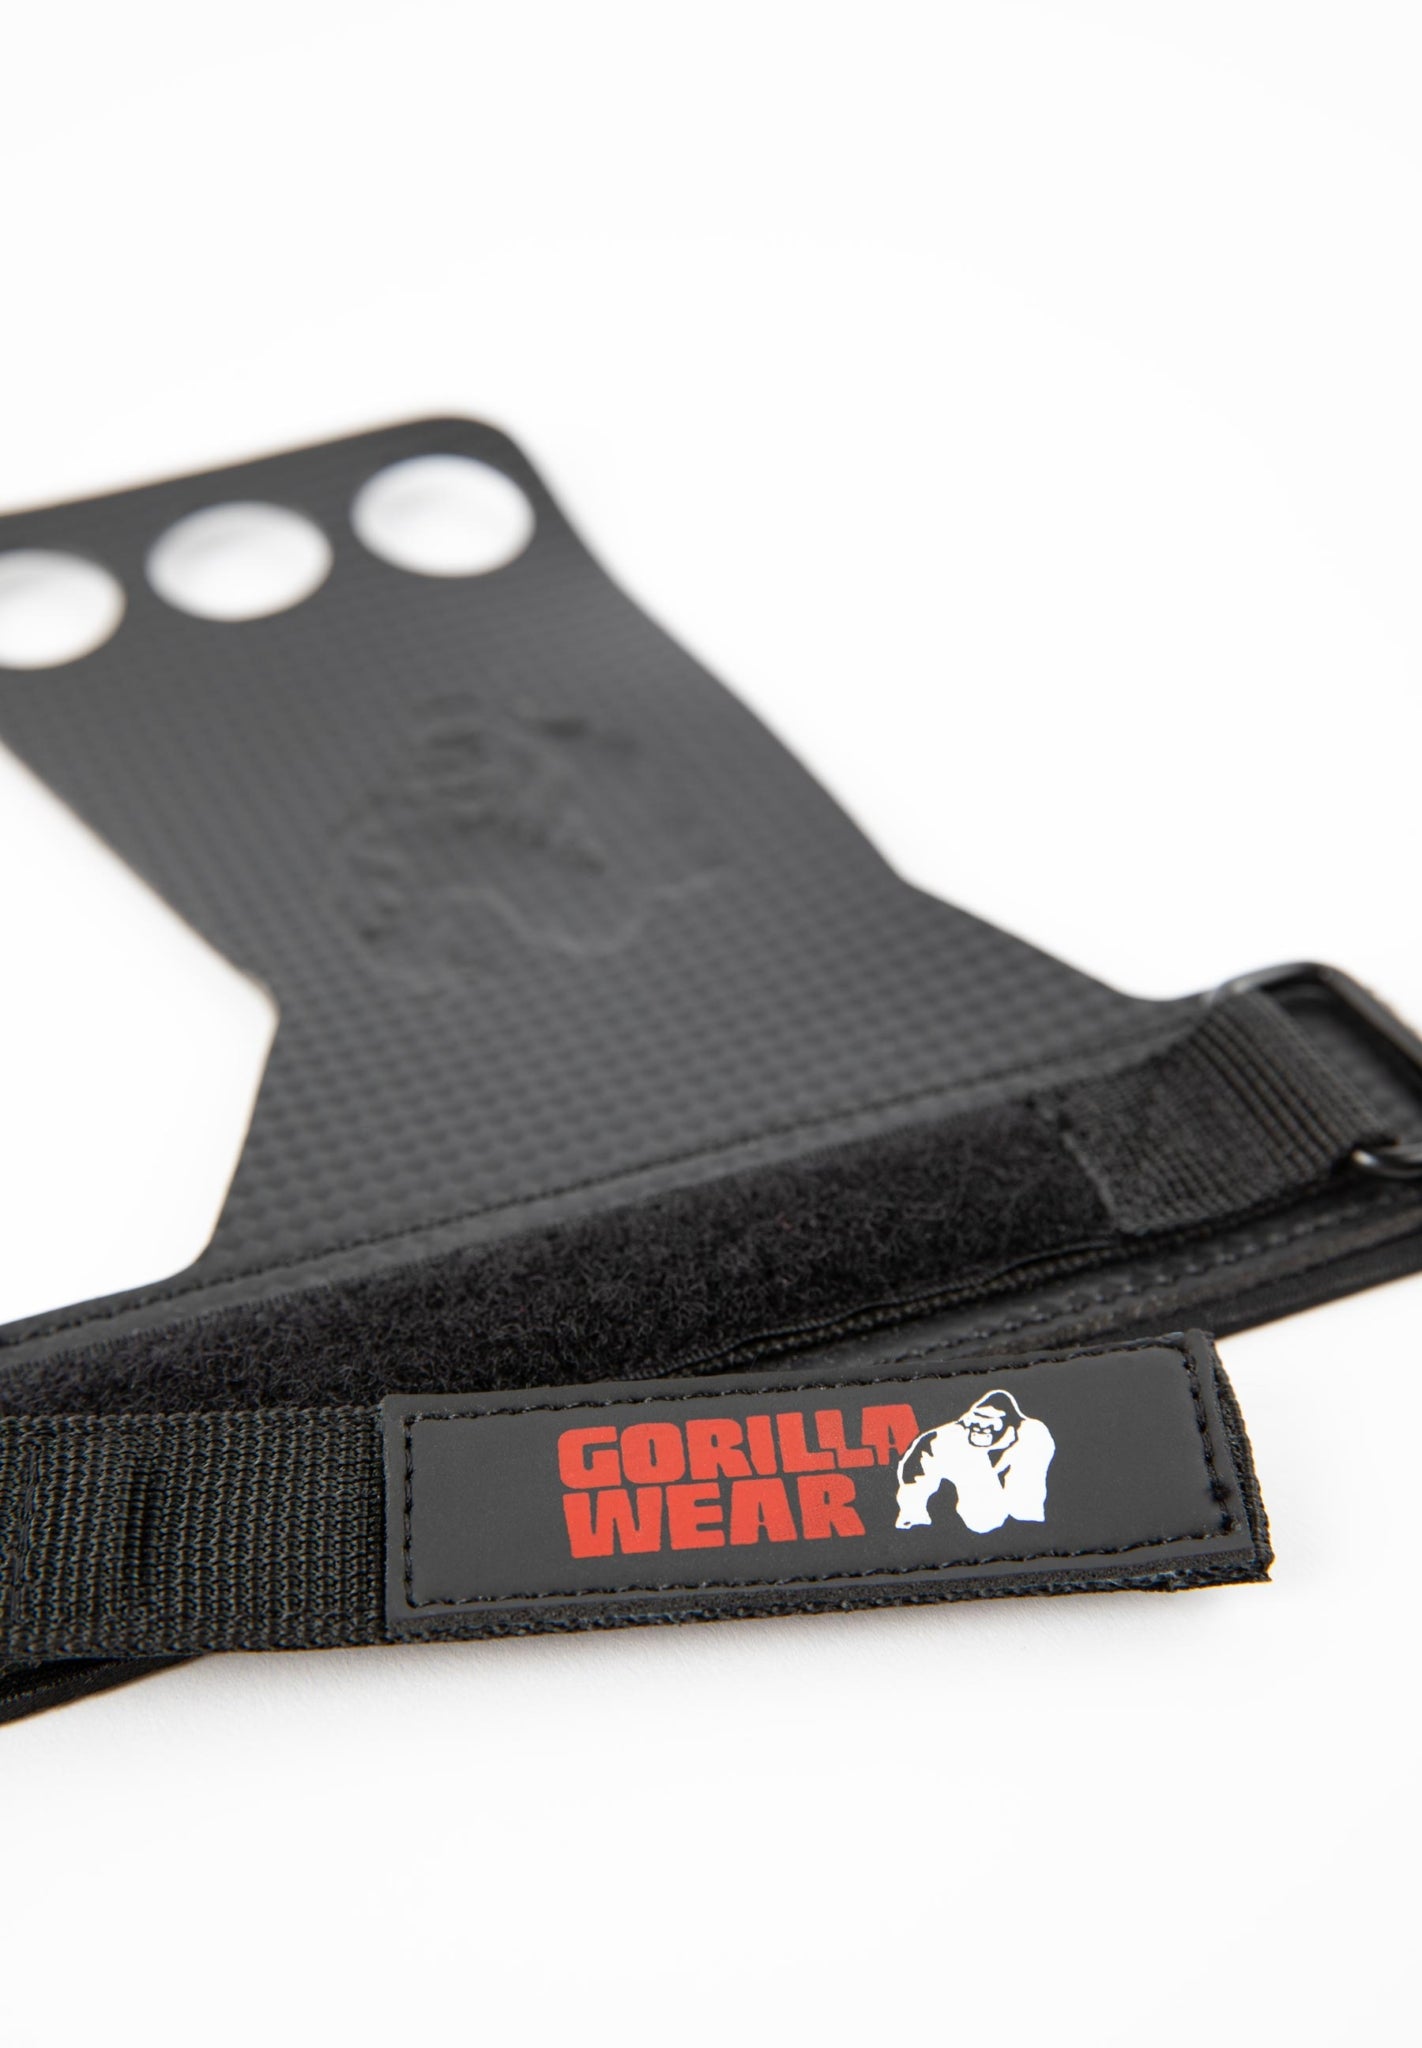 Gorilla Wear 3-Hole Carbon Lifting Grips - Schwarz